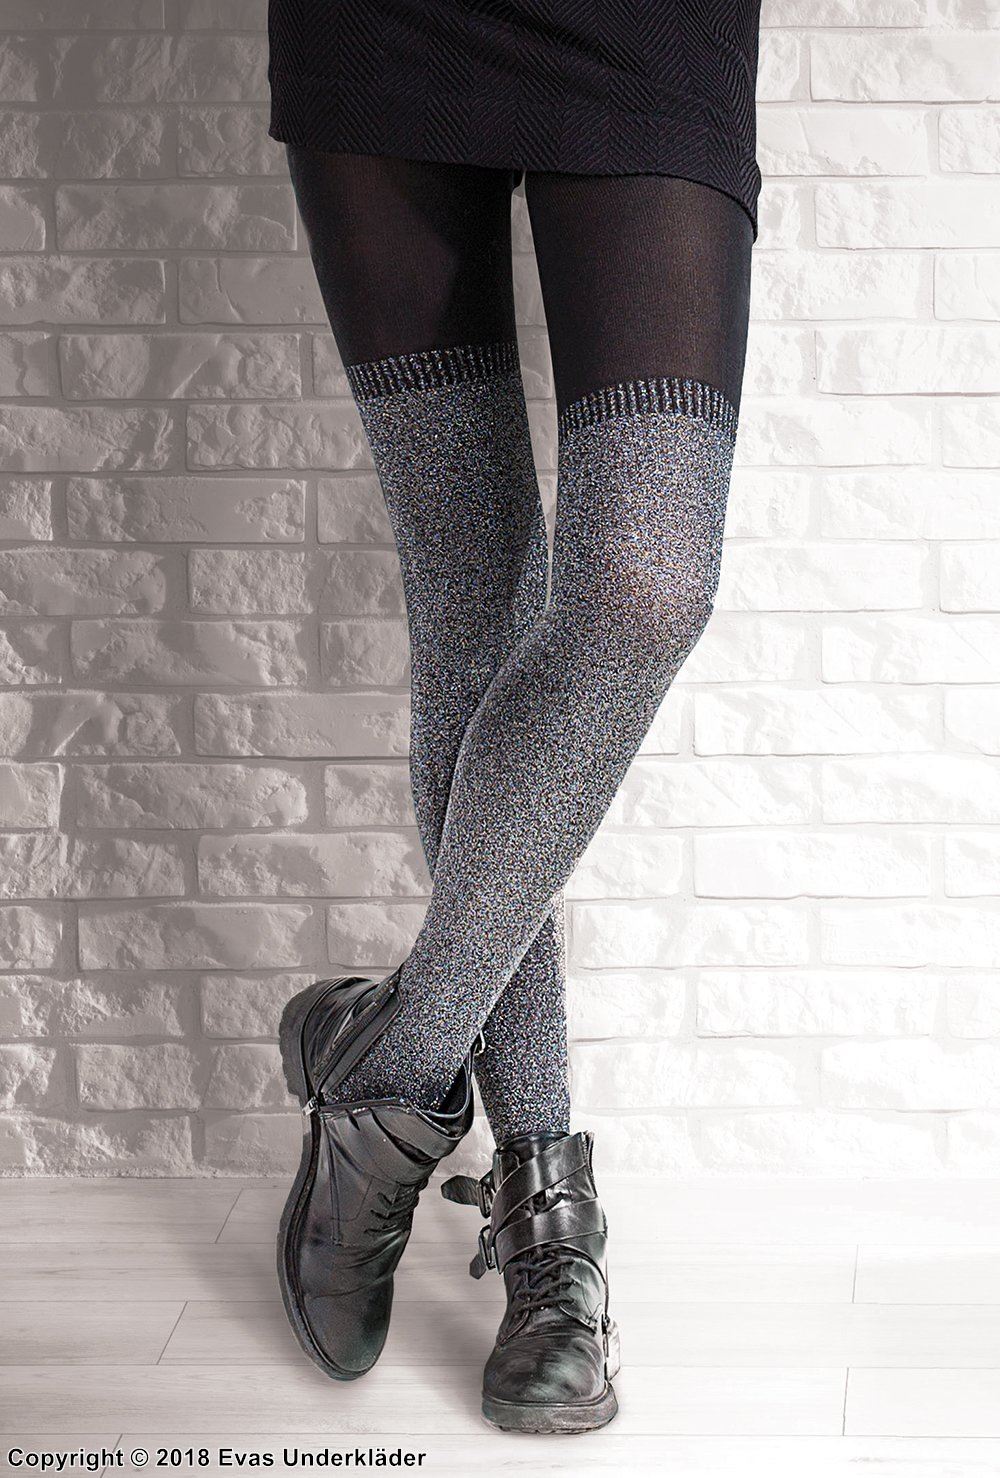 Pantyhose, cotton, over-knee socks imitation, shimmering lurex